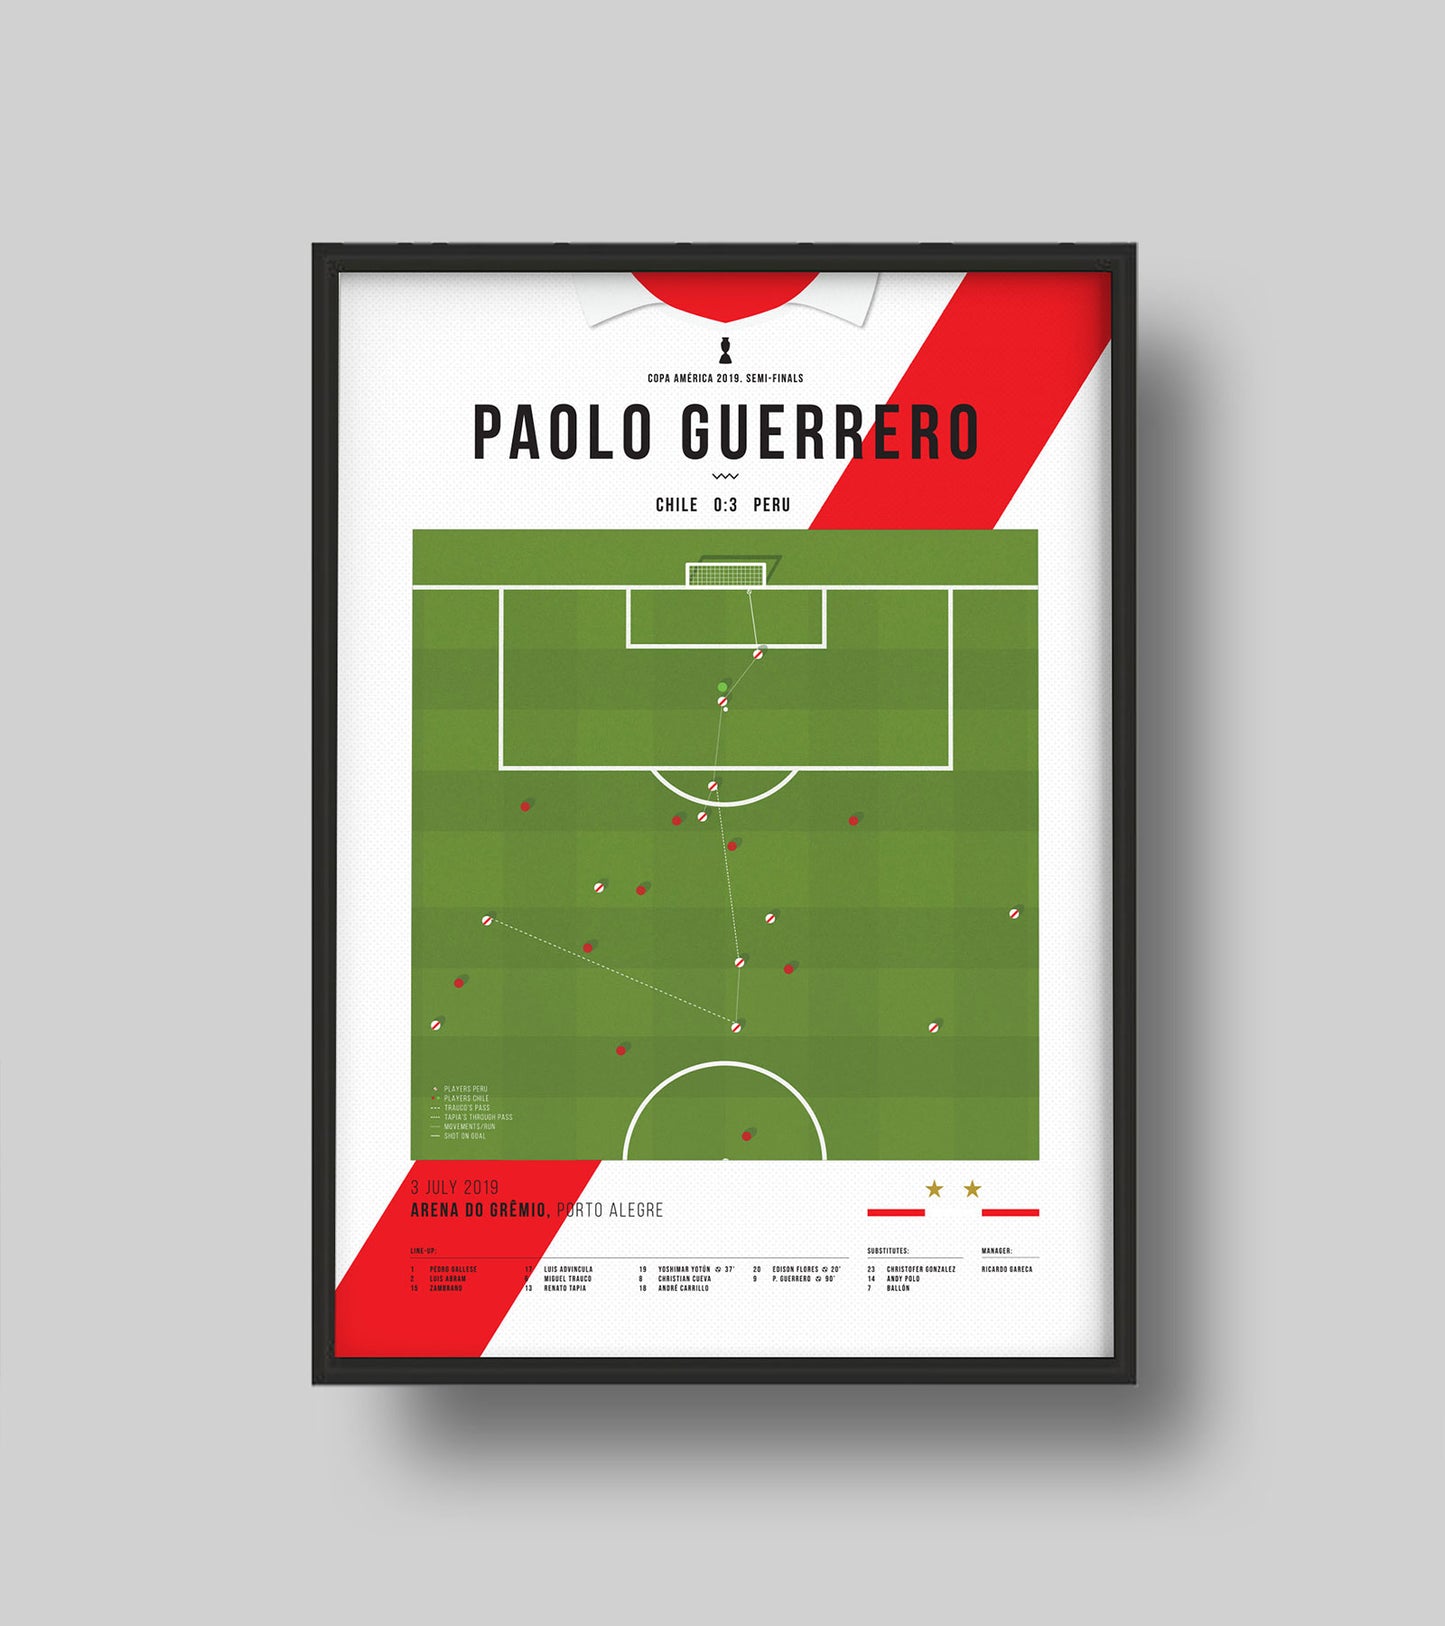 Paolo Guerreros atemberaubendes Tor gegen Chile